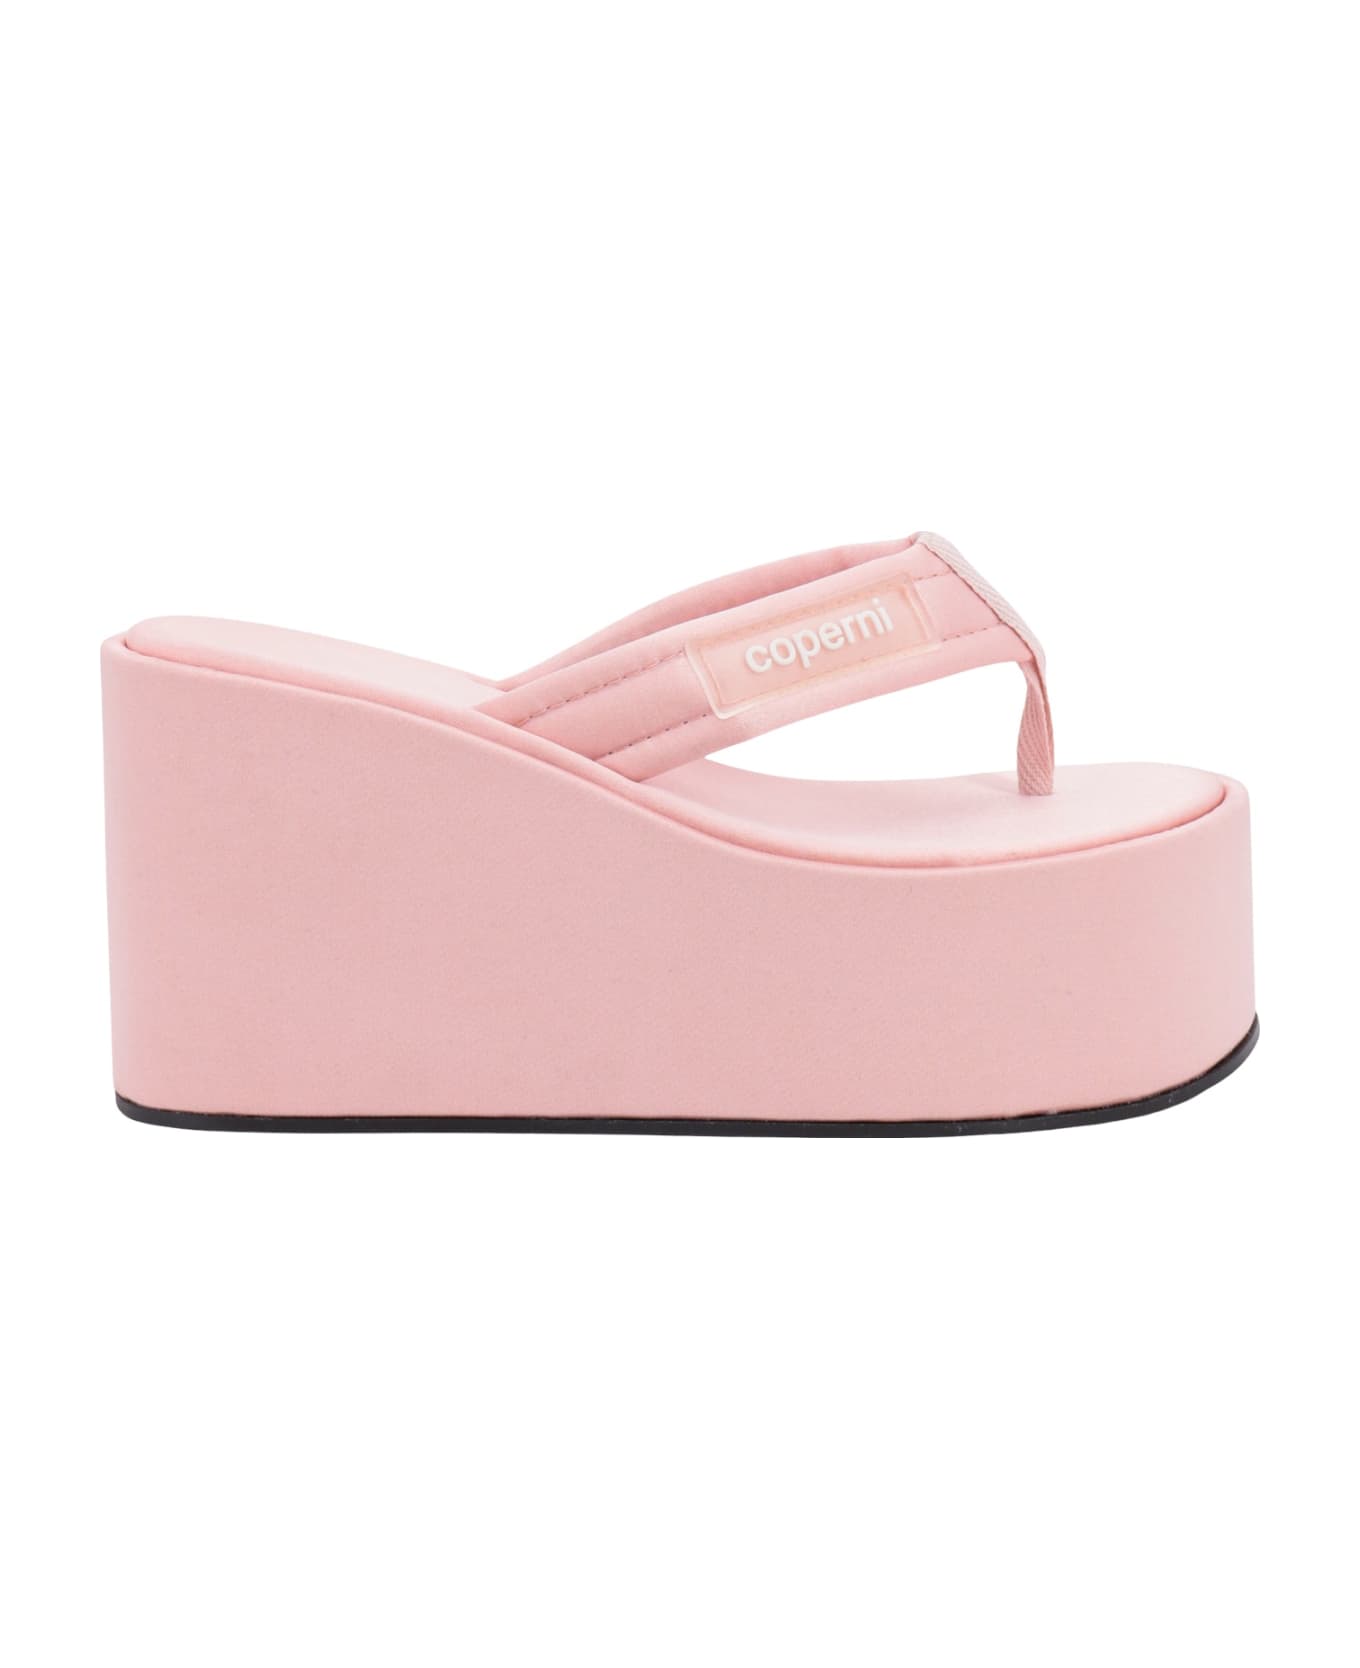 Coperni Sandals - Pink